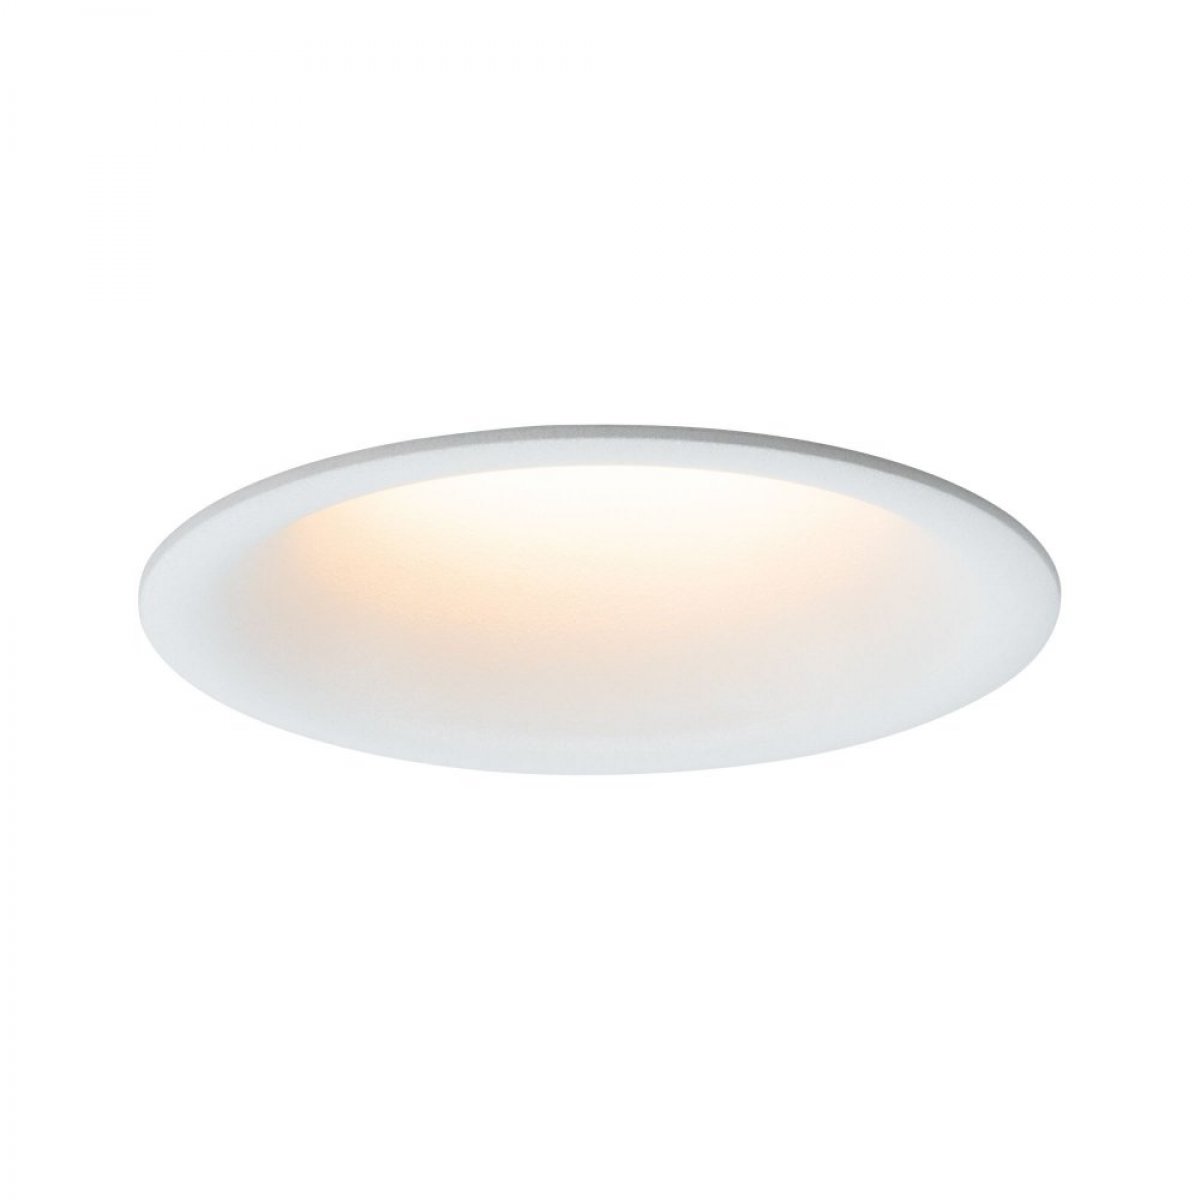 93419 Lampen kaufen im Paulmann LED 3x6,5W Leuchten blendfrei online dimmbar Cymbal Weiß matt No. Einbauleuchte --> &